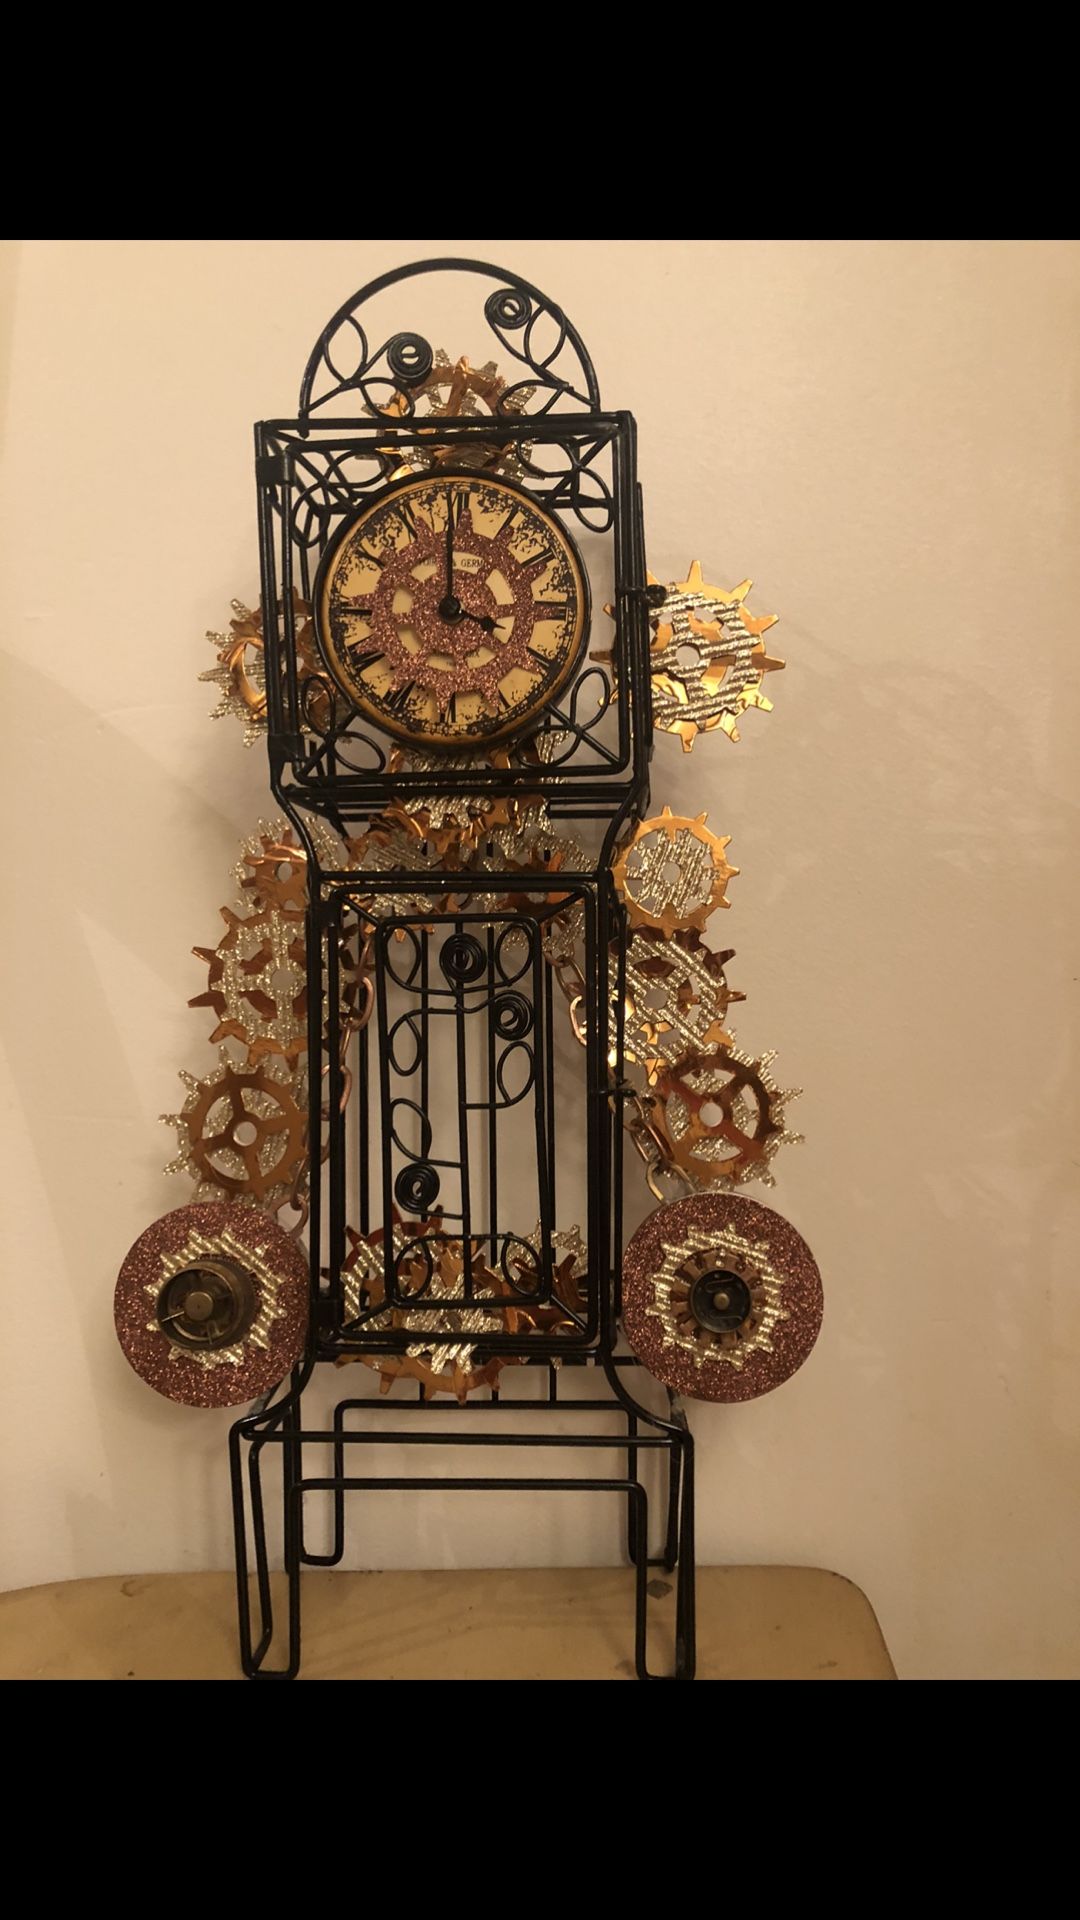 Hand made decorative steampunk clock